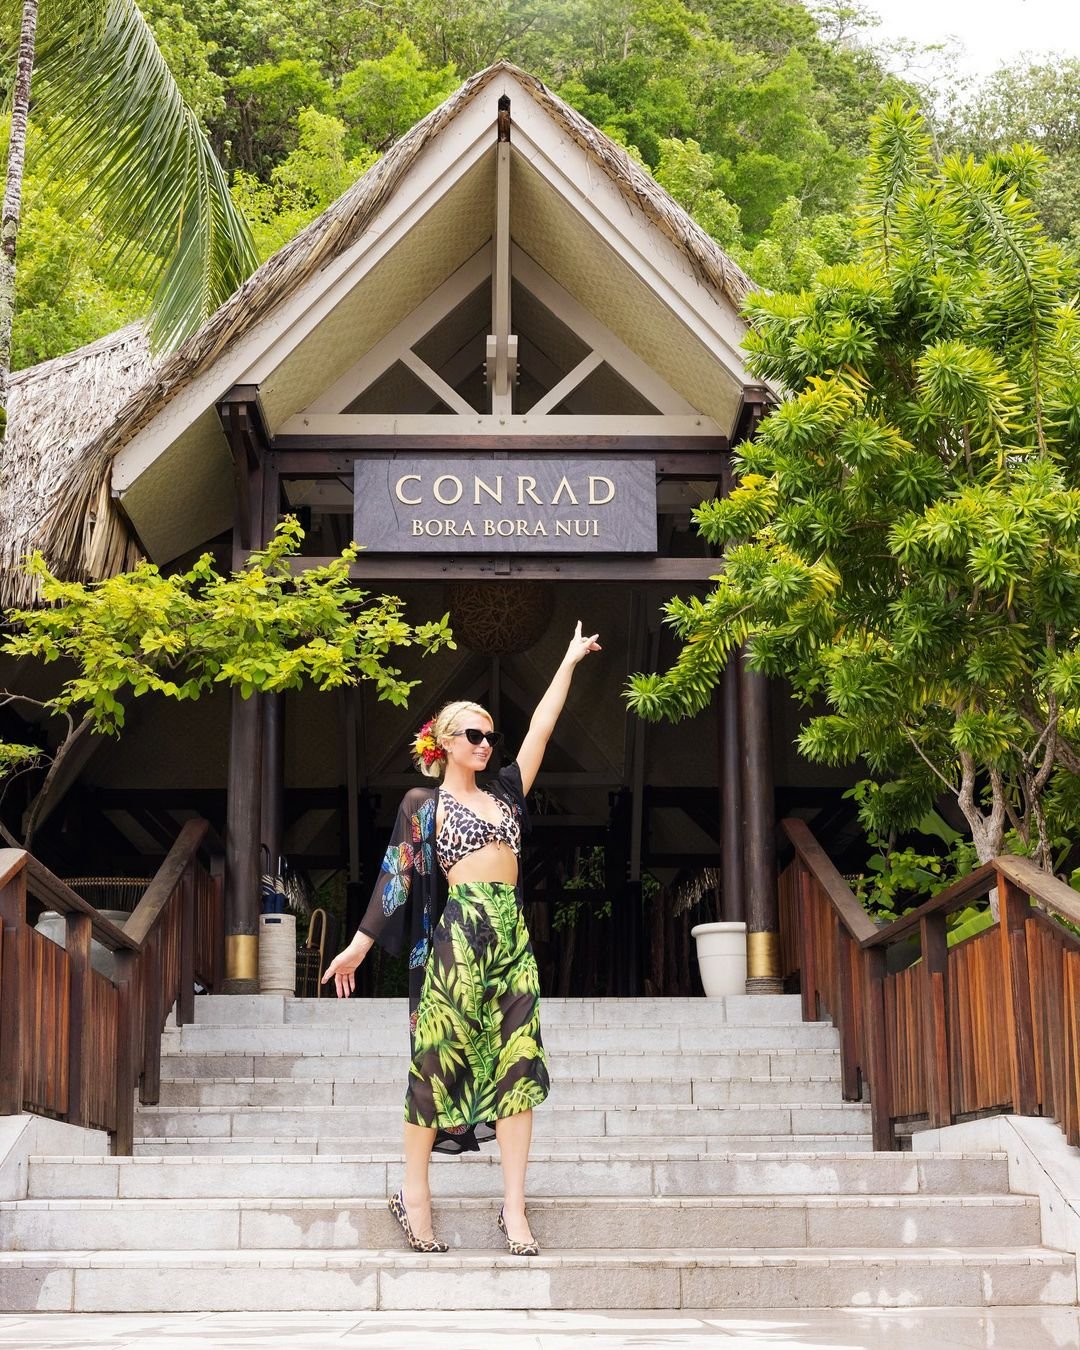 Paris Hilton Honeymoon In Bora Bora (4)